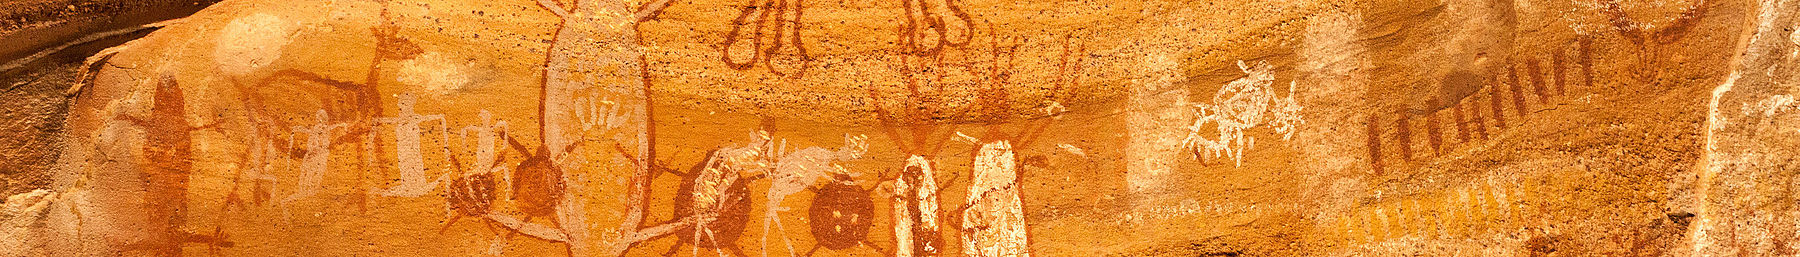 Pasica Serra da Capivara Petroglyphs.jpg